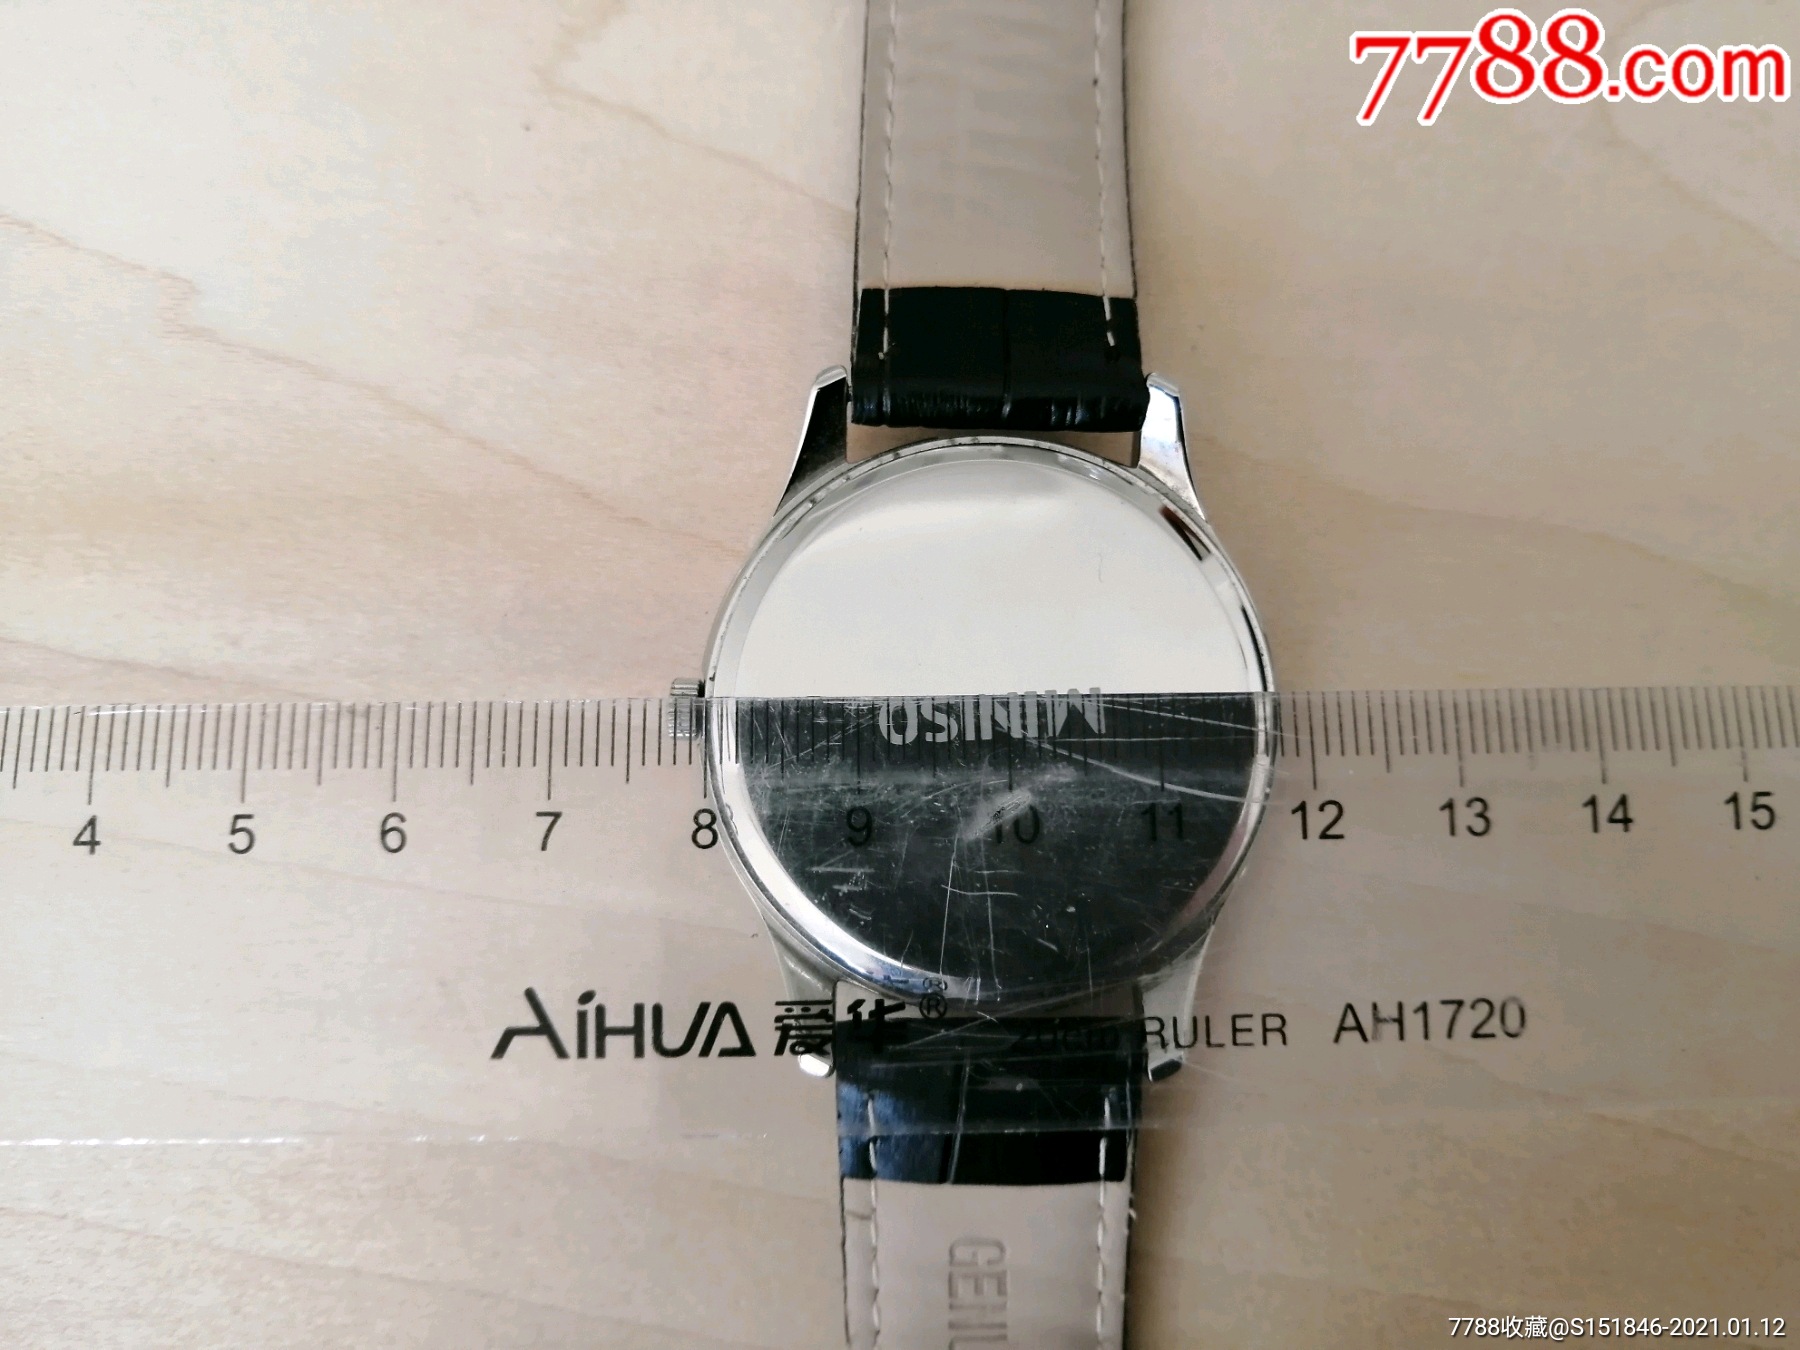 miniso名创优品2017年产电池石英手表一只运行功能完好皮表带背